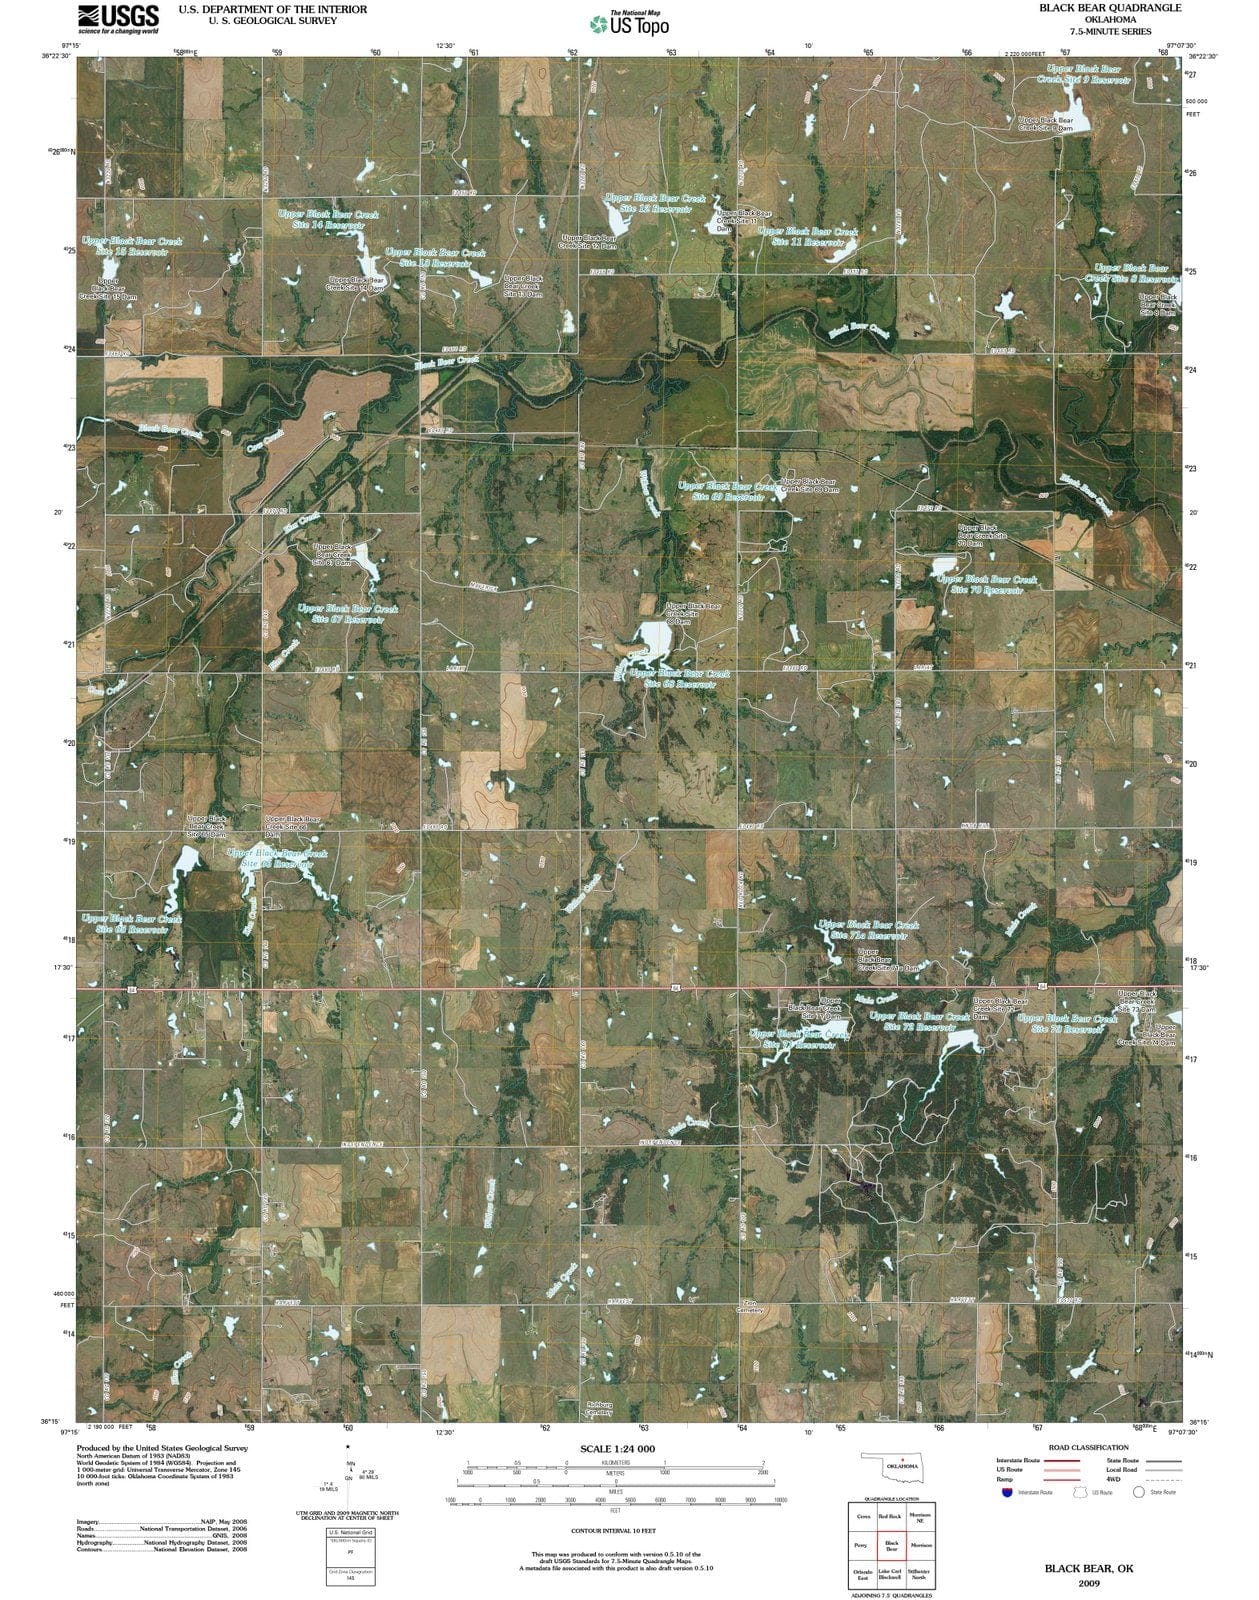 2009 Black Bear, OK - Oklahoma - USGS Topographic Map